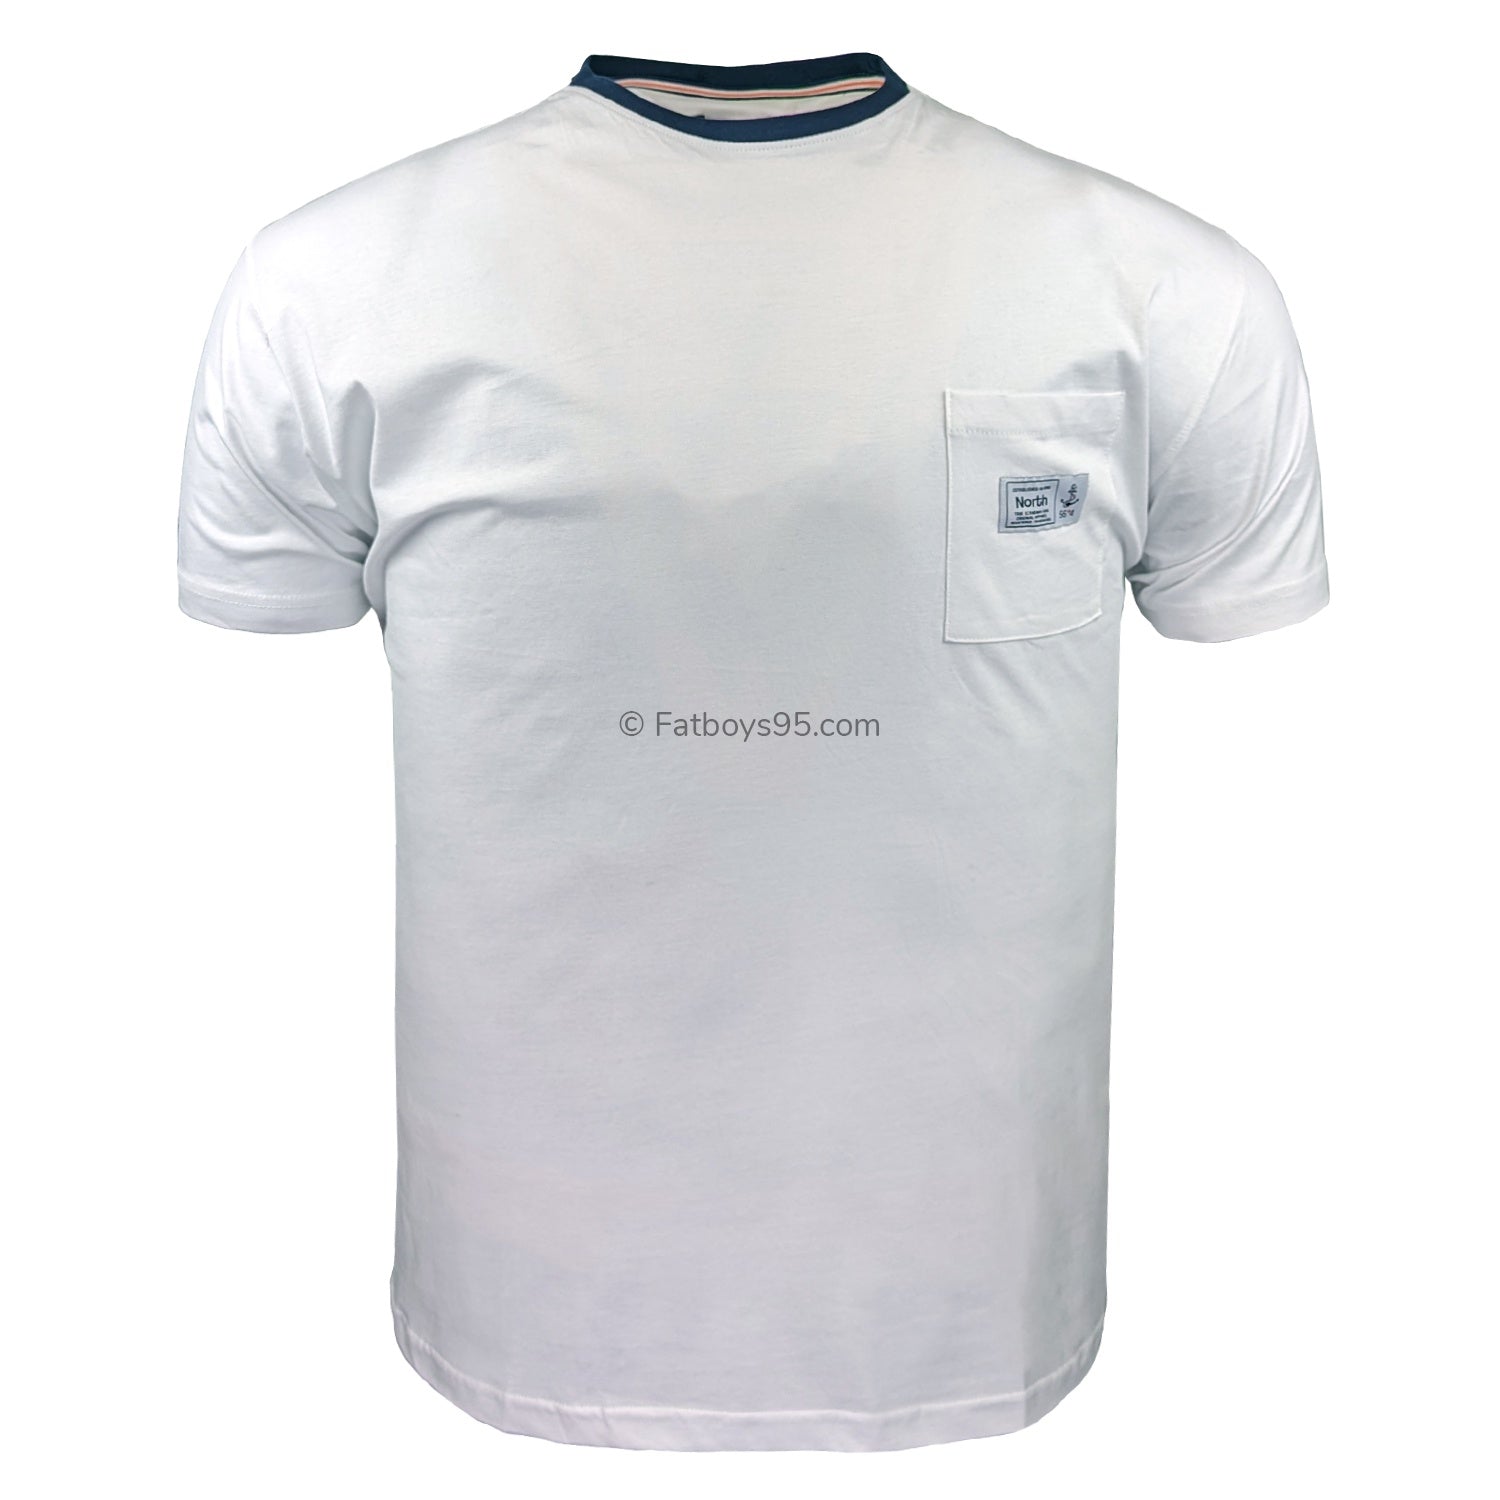 North 56°4 T-Shirt - 41143 - White 1